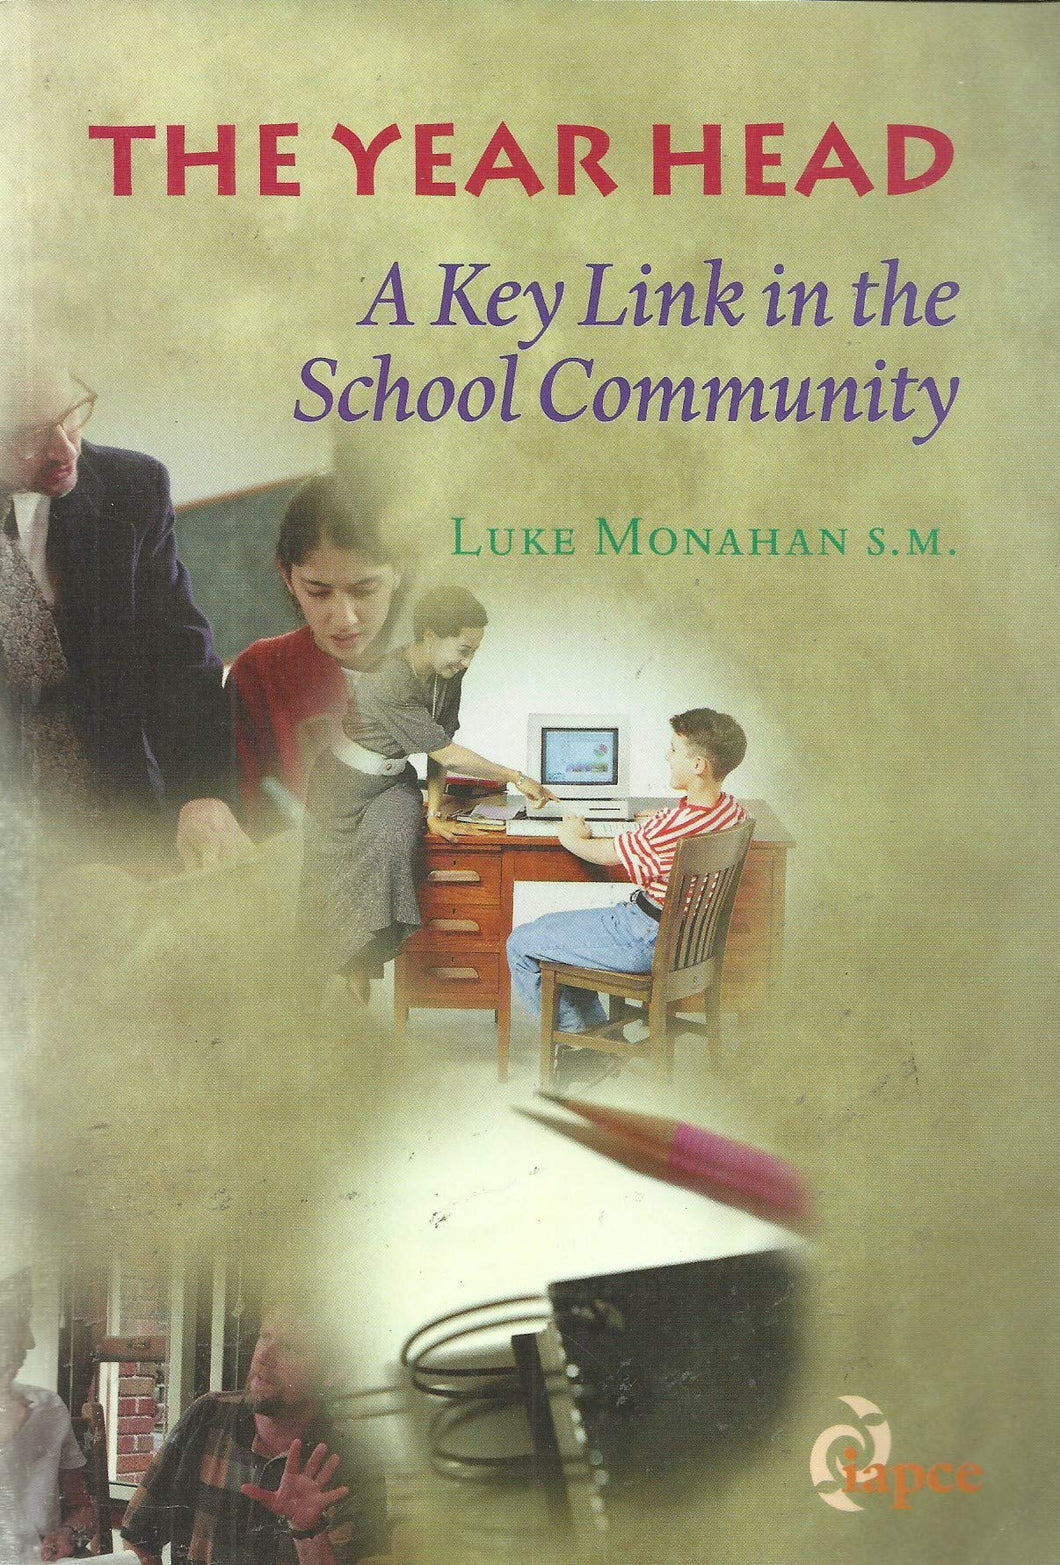 The Year Head: A Key Link in the School Community